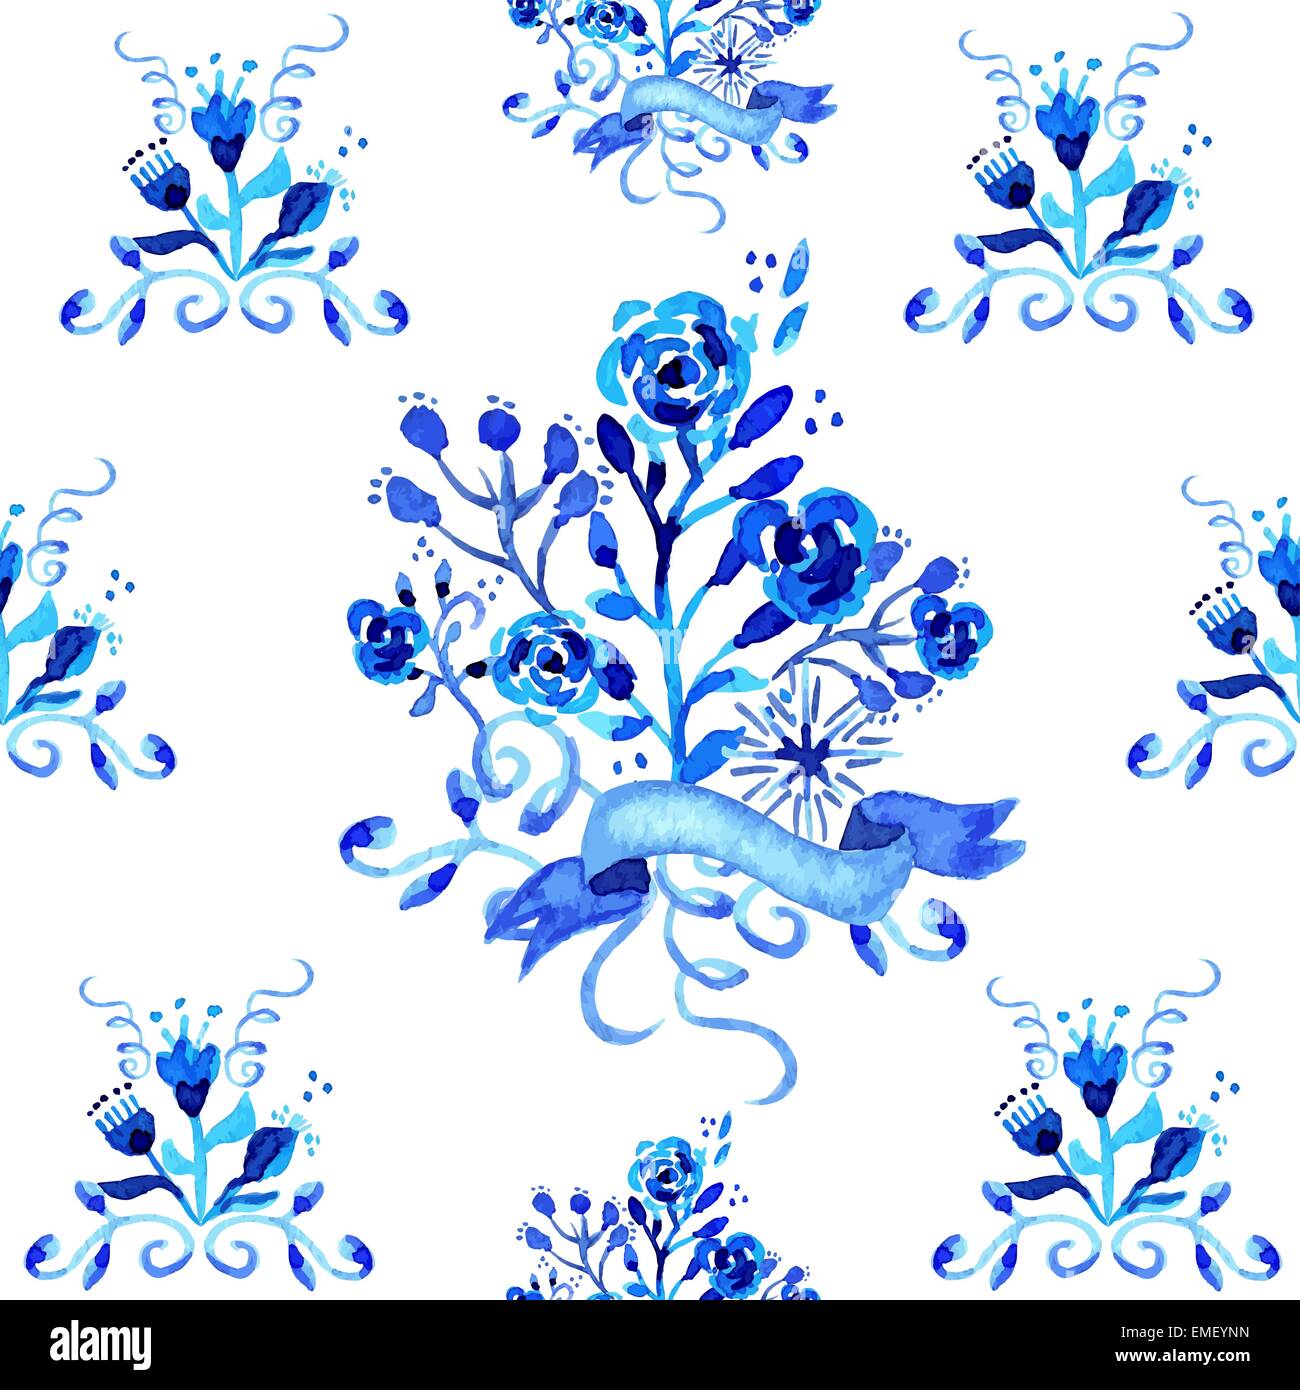 Aquarell Blumen Musterdesign Abbildung Stock Vektor